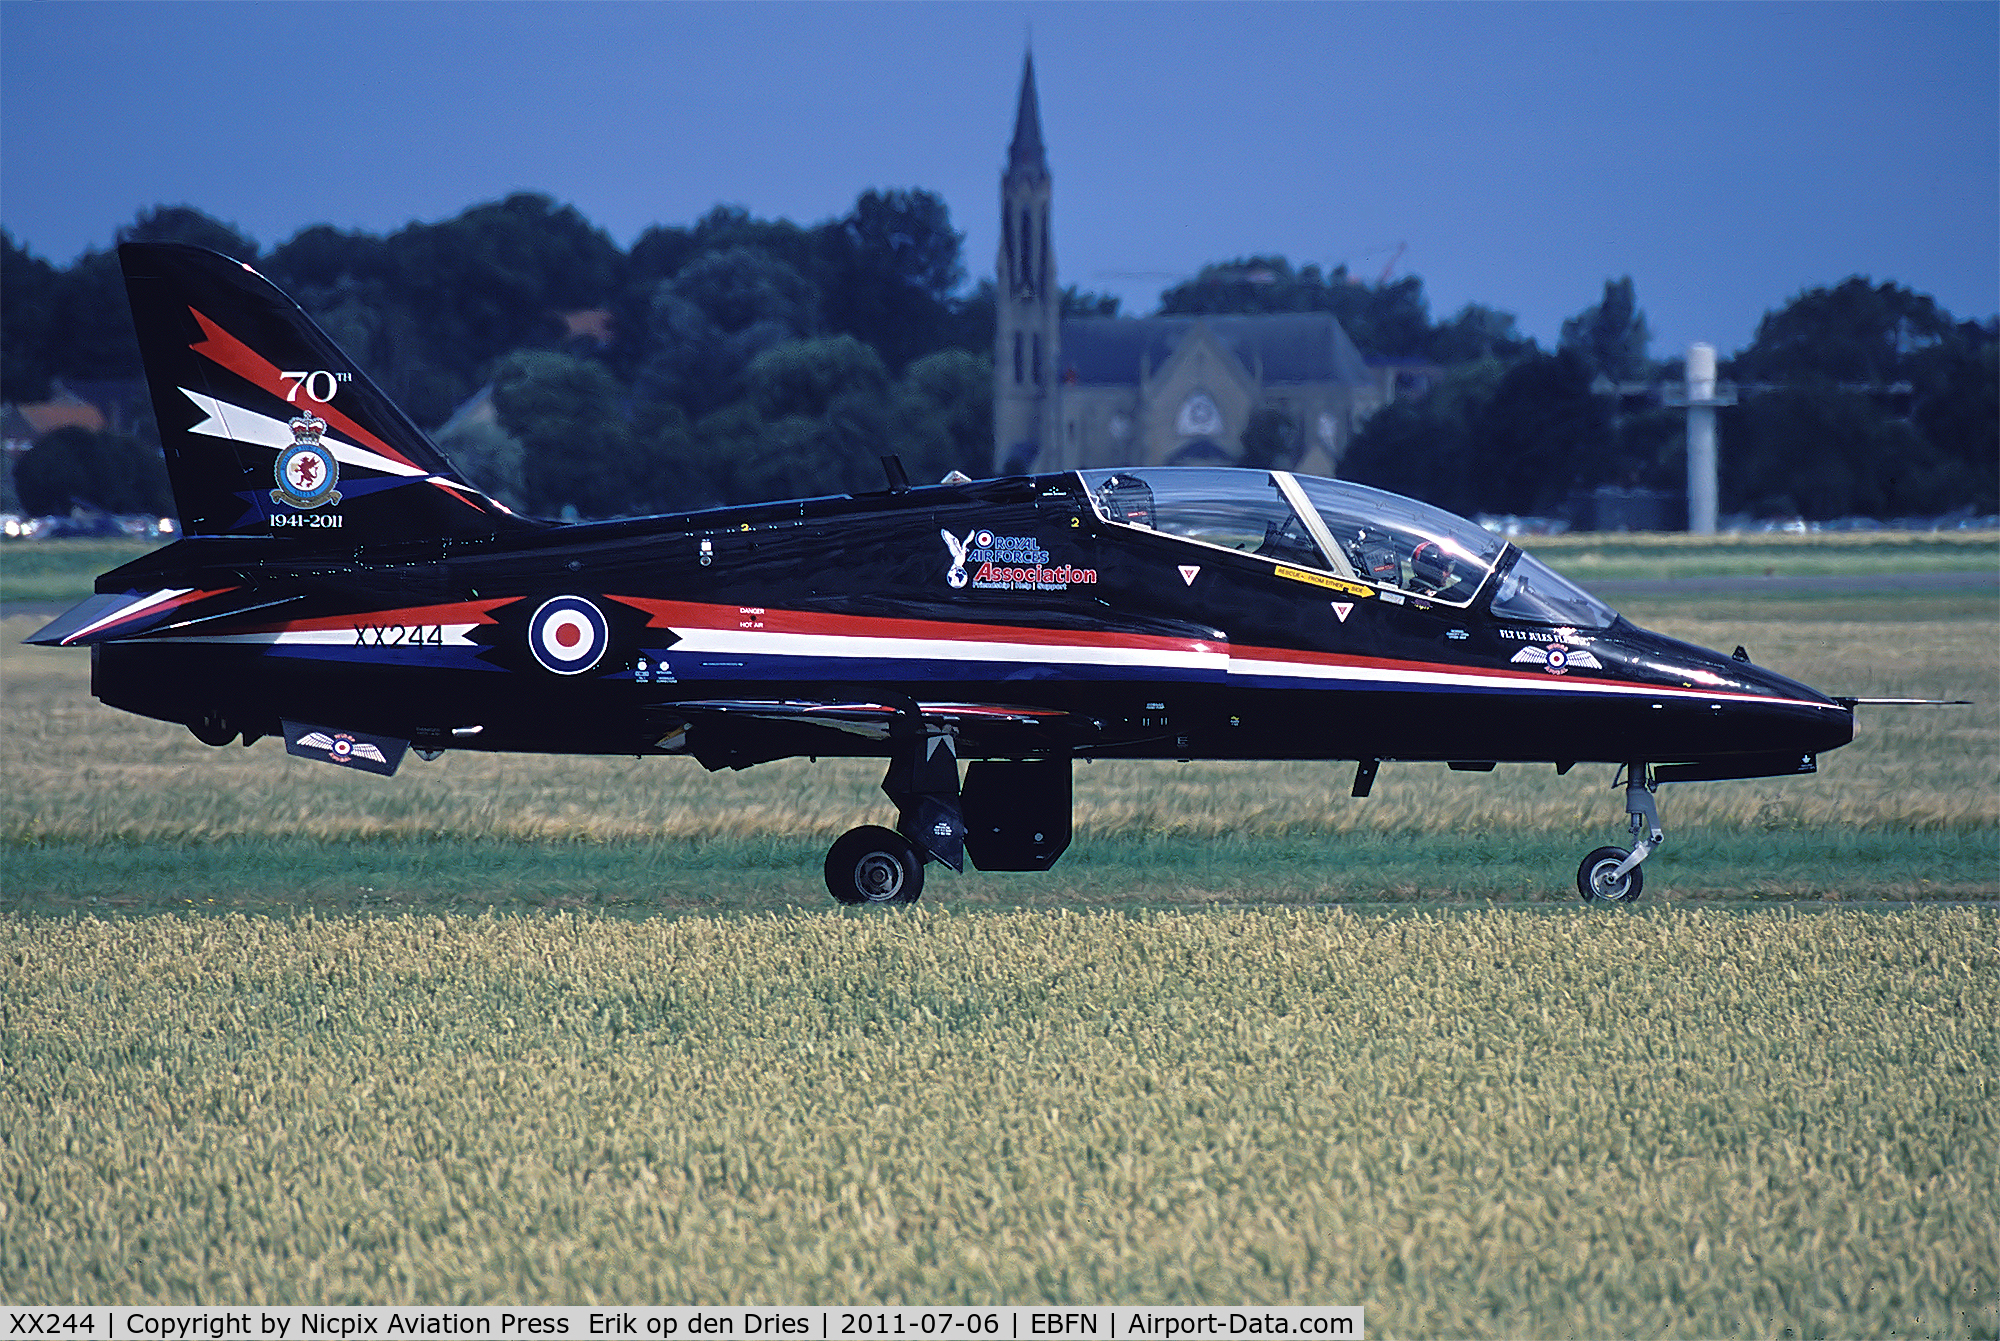 XX244, 1978 Hawker Siddeley Hawk T.1 C/N 080/312080, XX244 in its' attractive Solo-Display scheme.